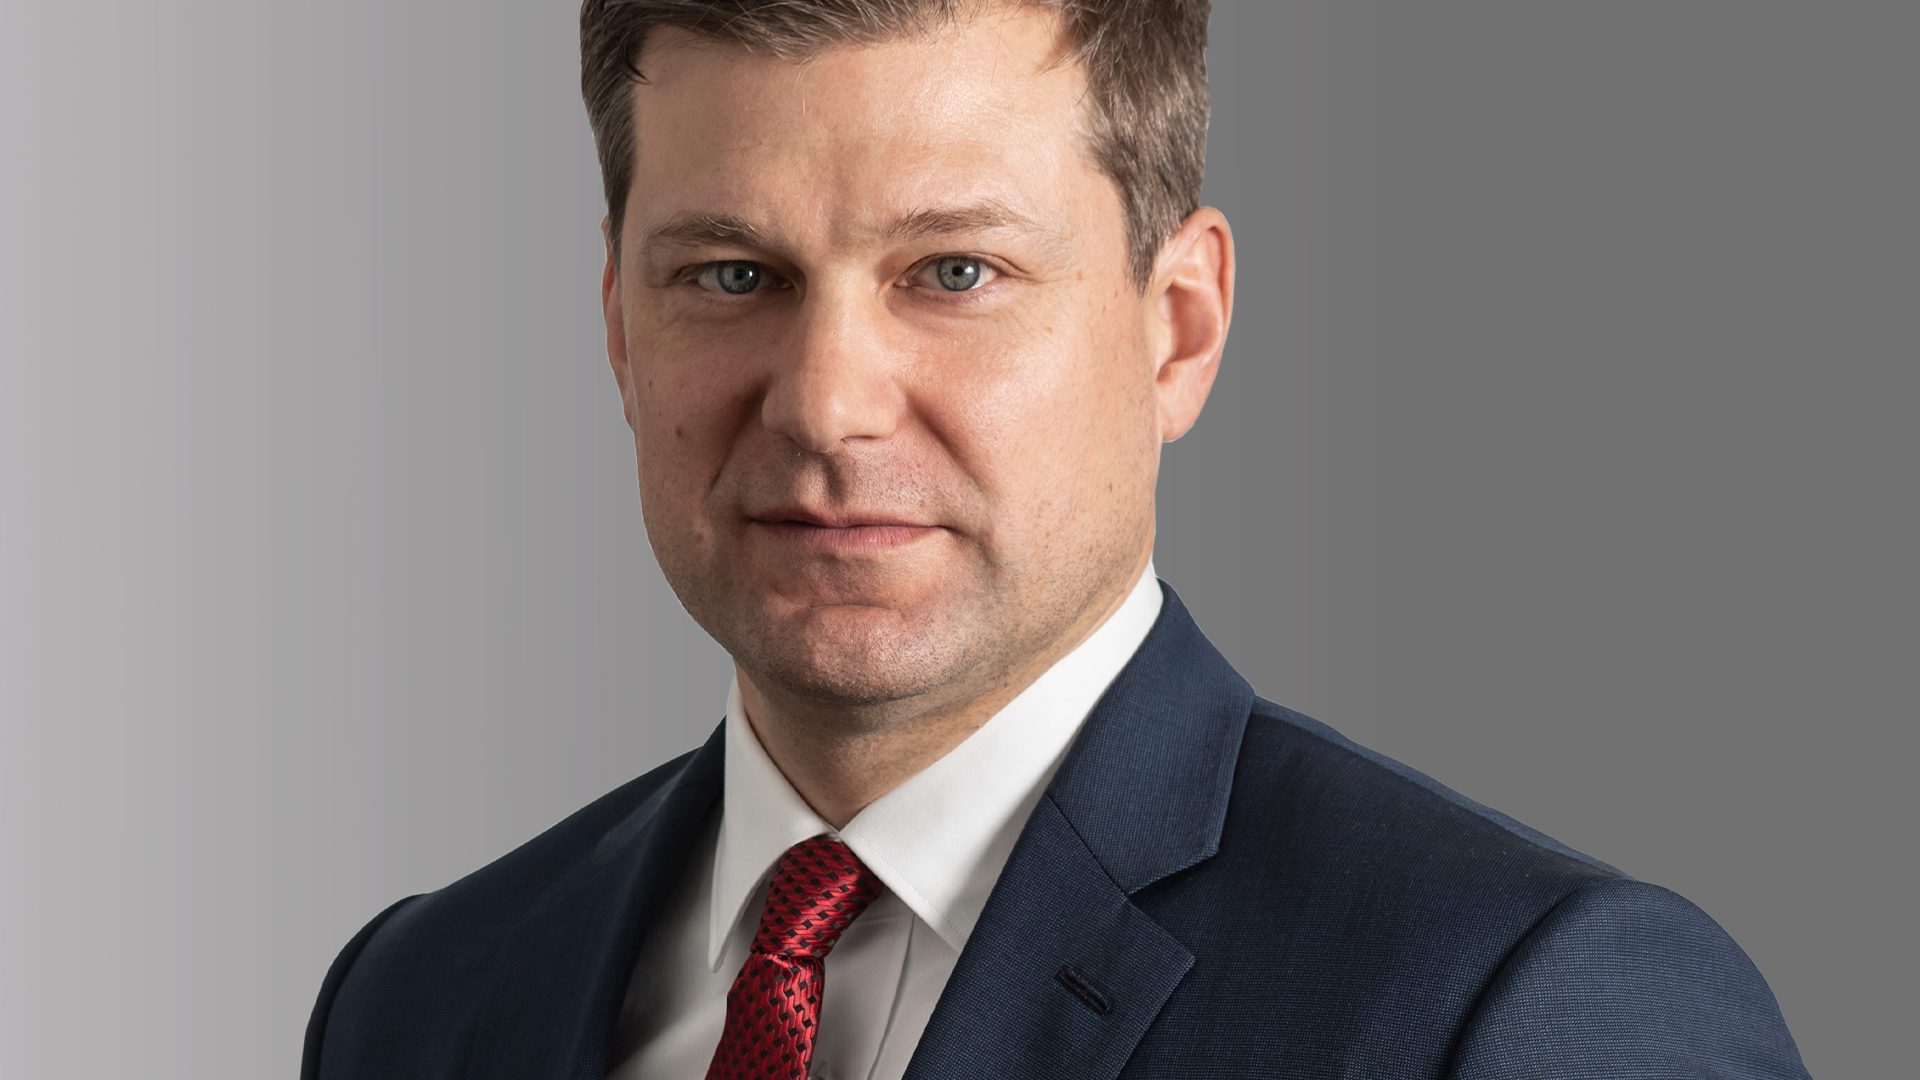 Iveco Group CEO, Gerrit Marx CNH